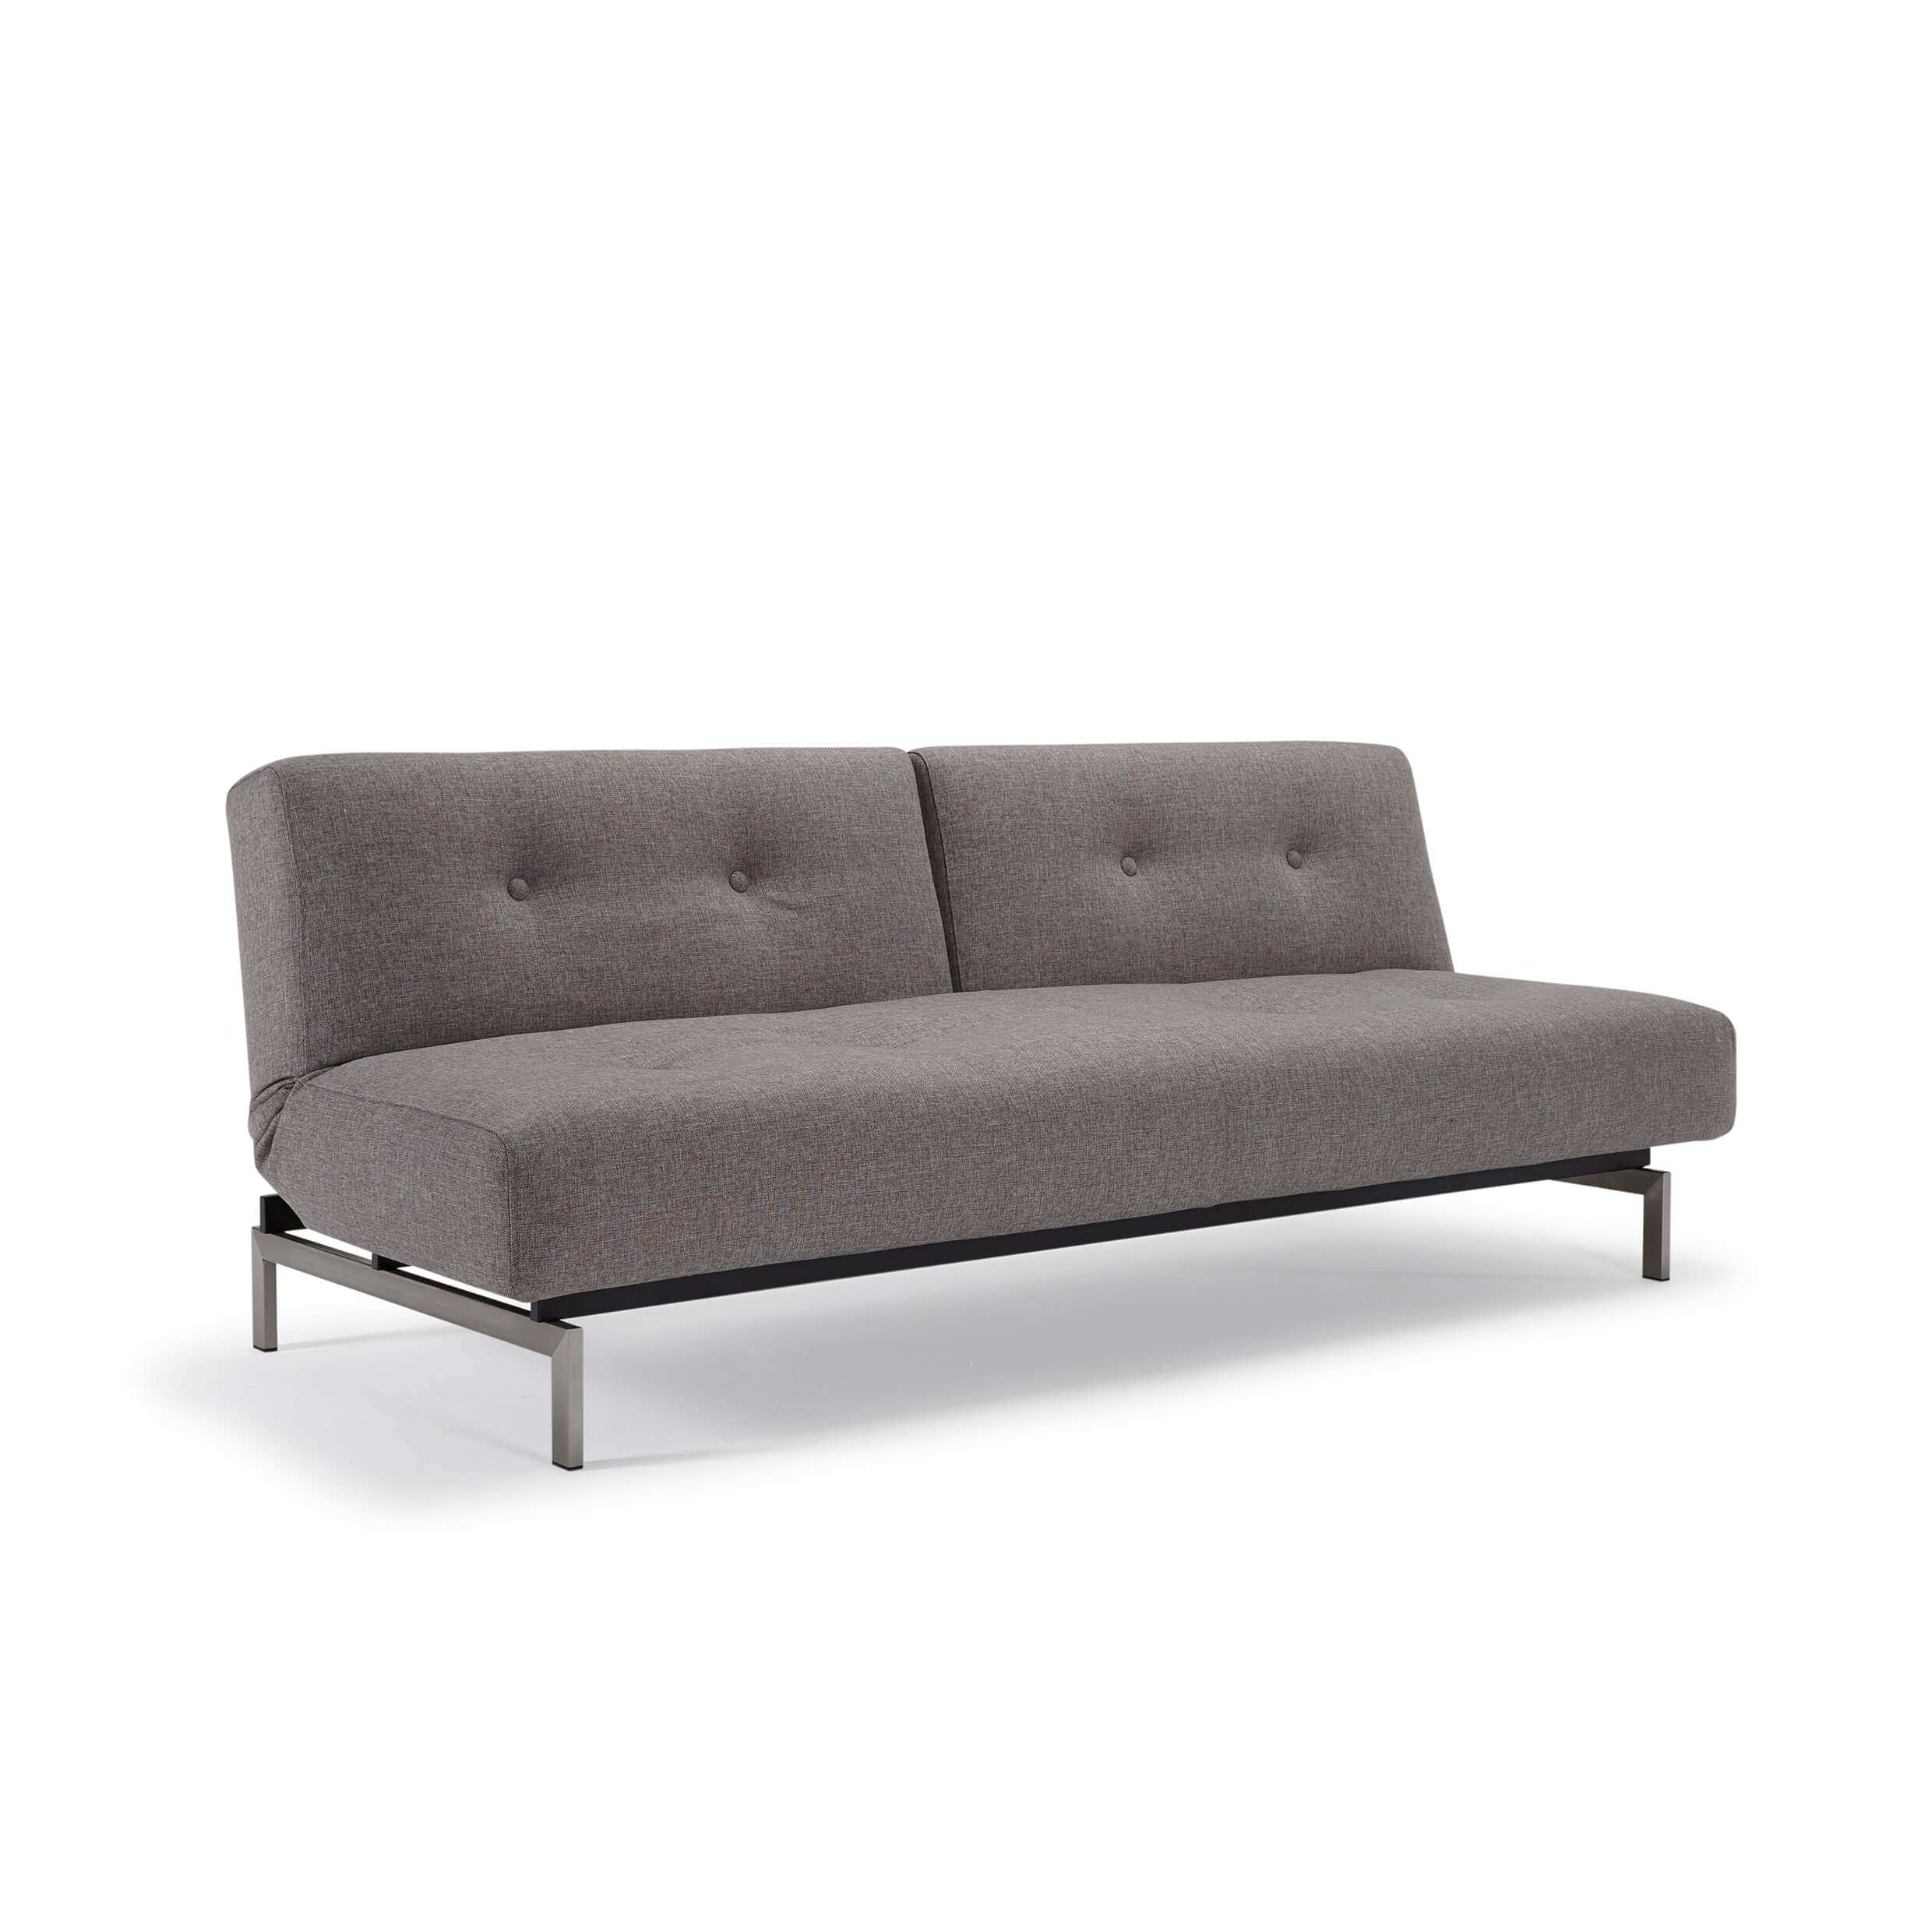 Enlarge Convertible Futon Sofa Bed, Convertible Futon Sofa Couch